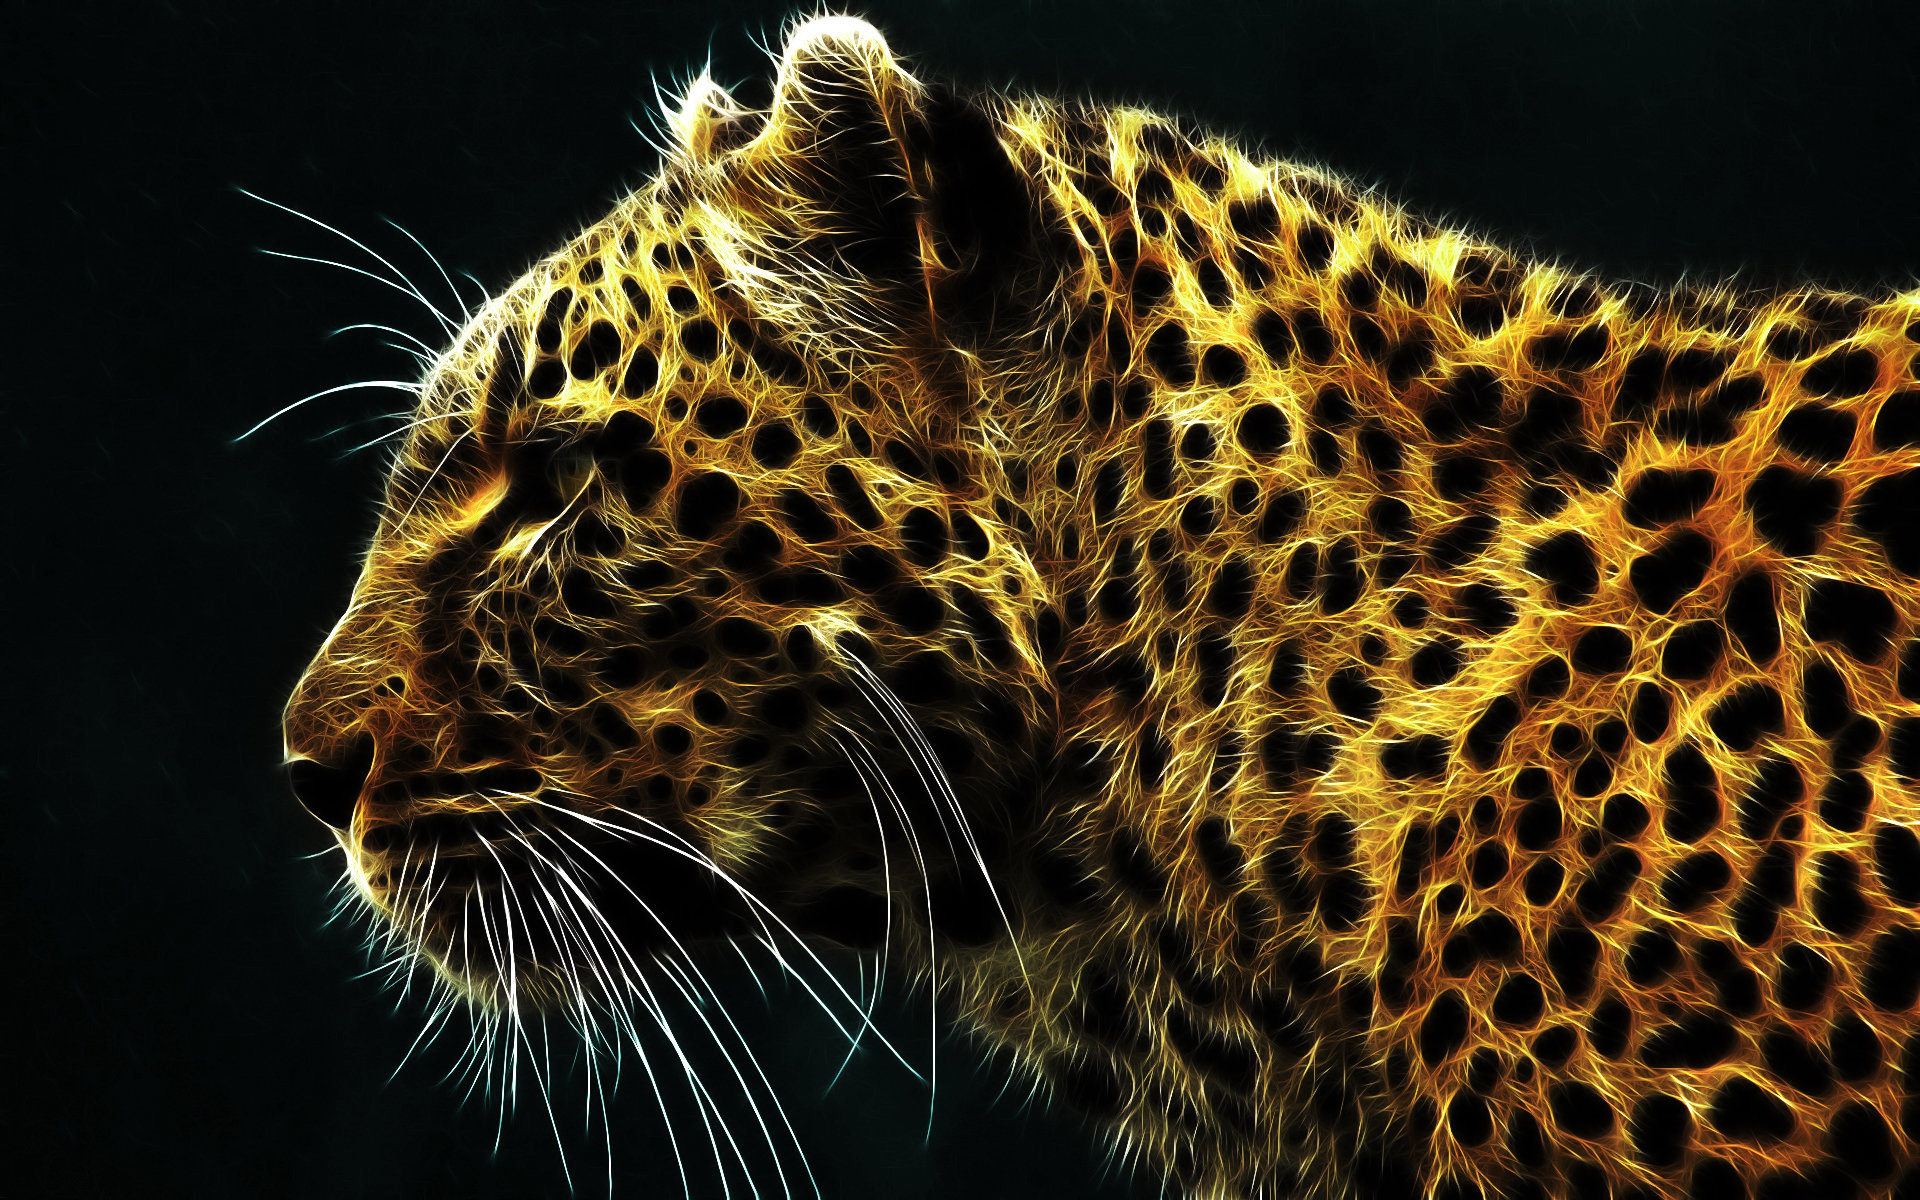 Cheetah wallpaper HD for desktop background